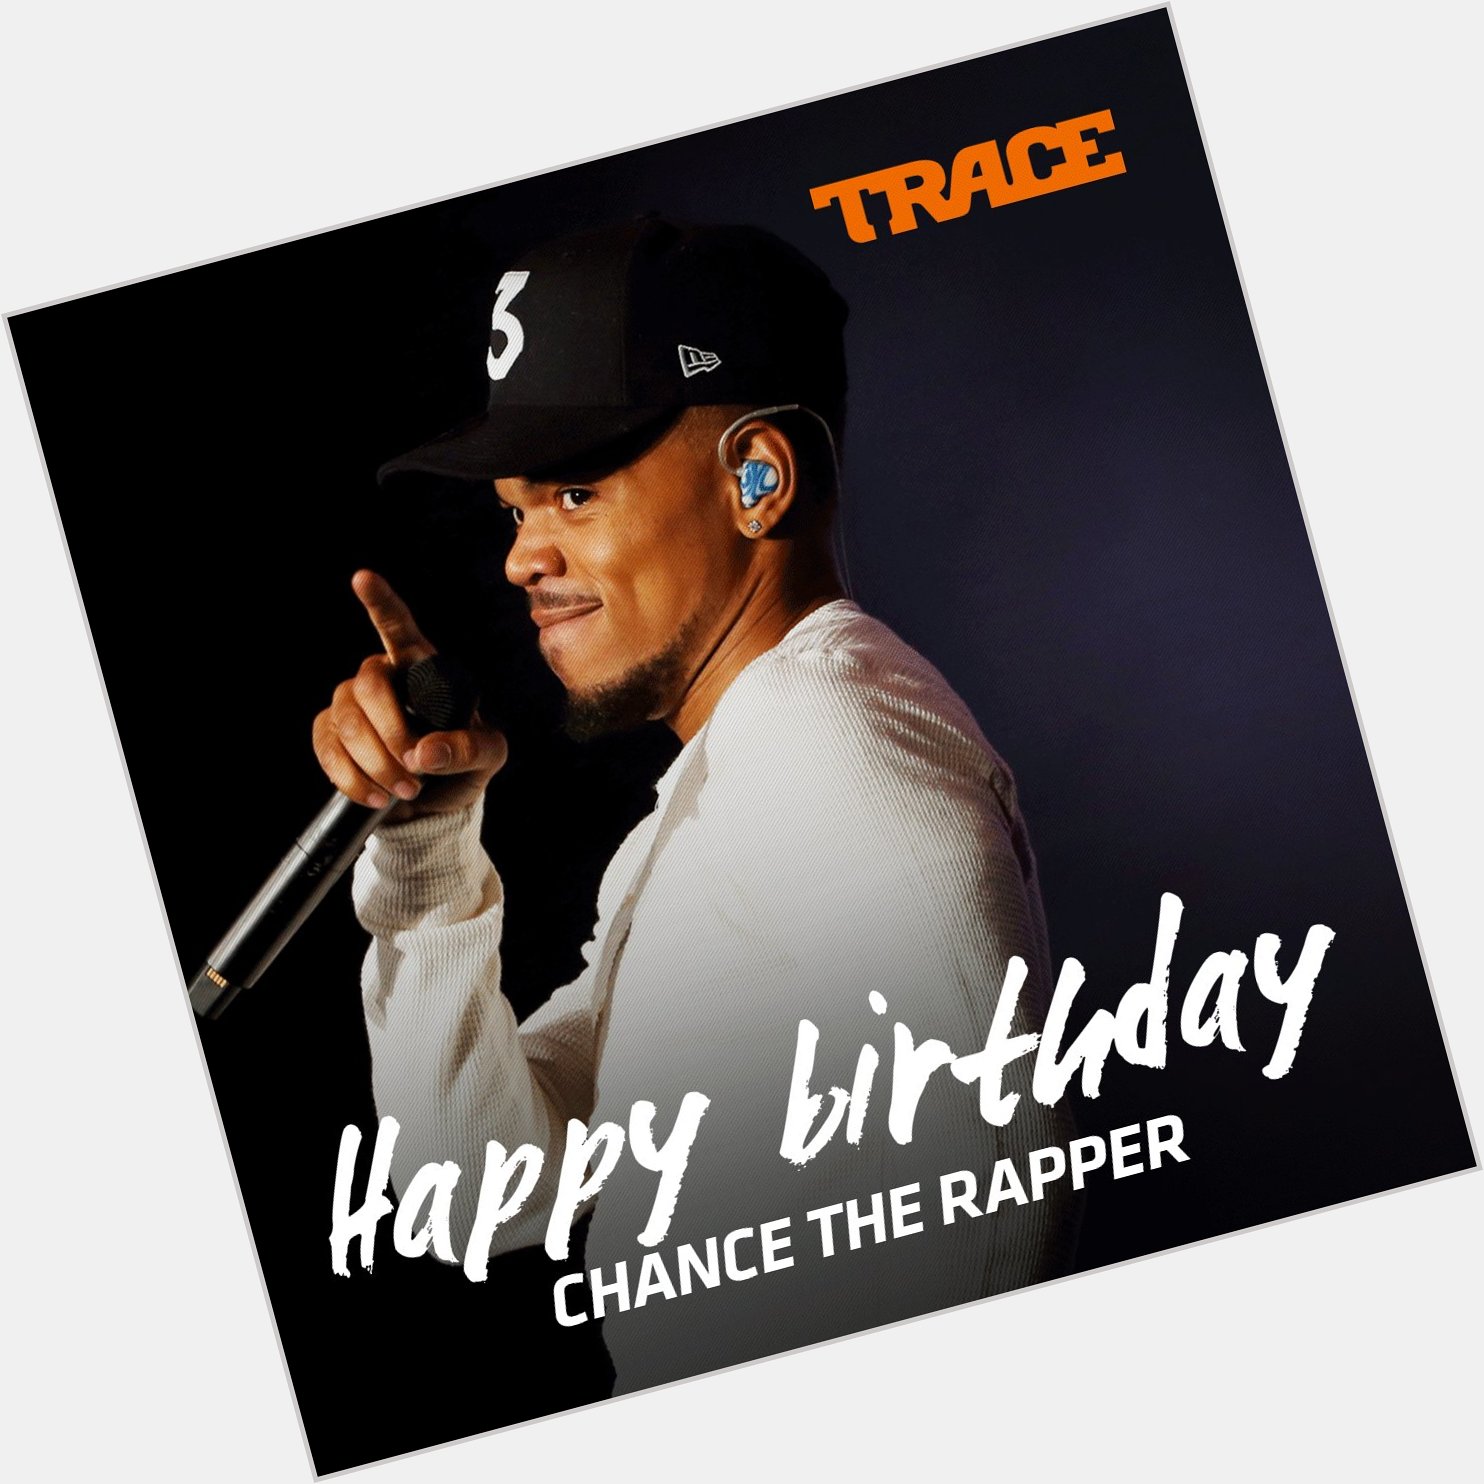 Happy Birthday to Chance the Rapper a true trial blazer! 